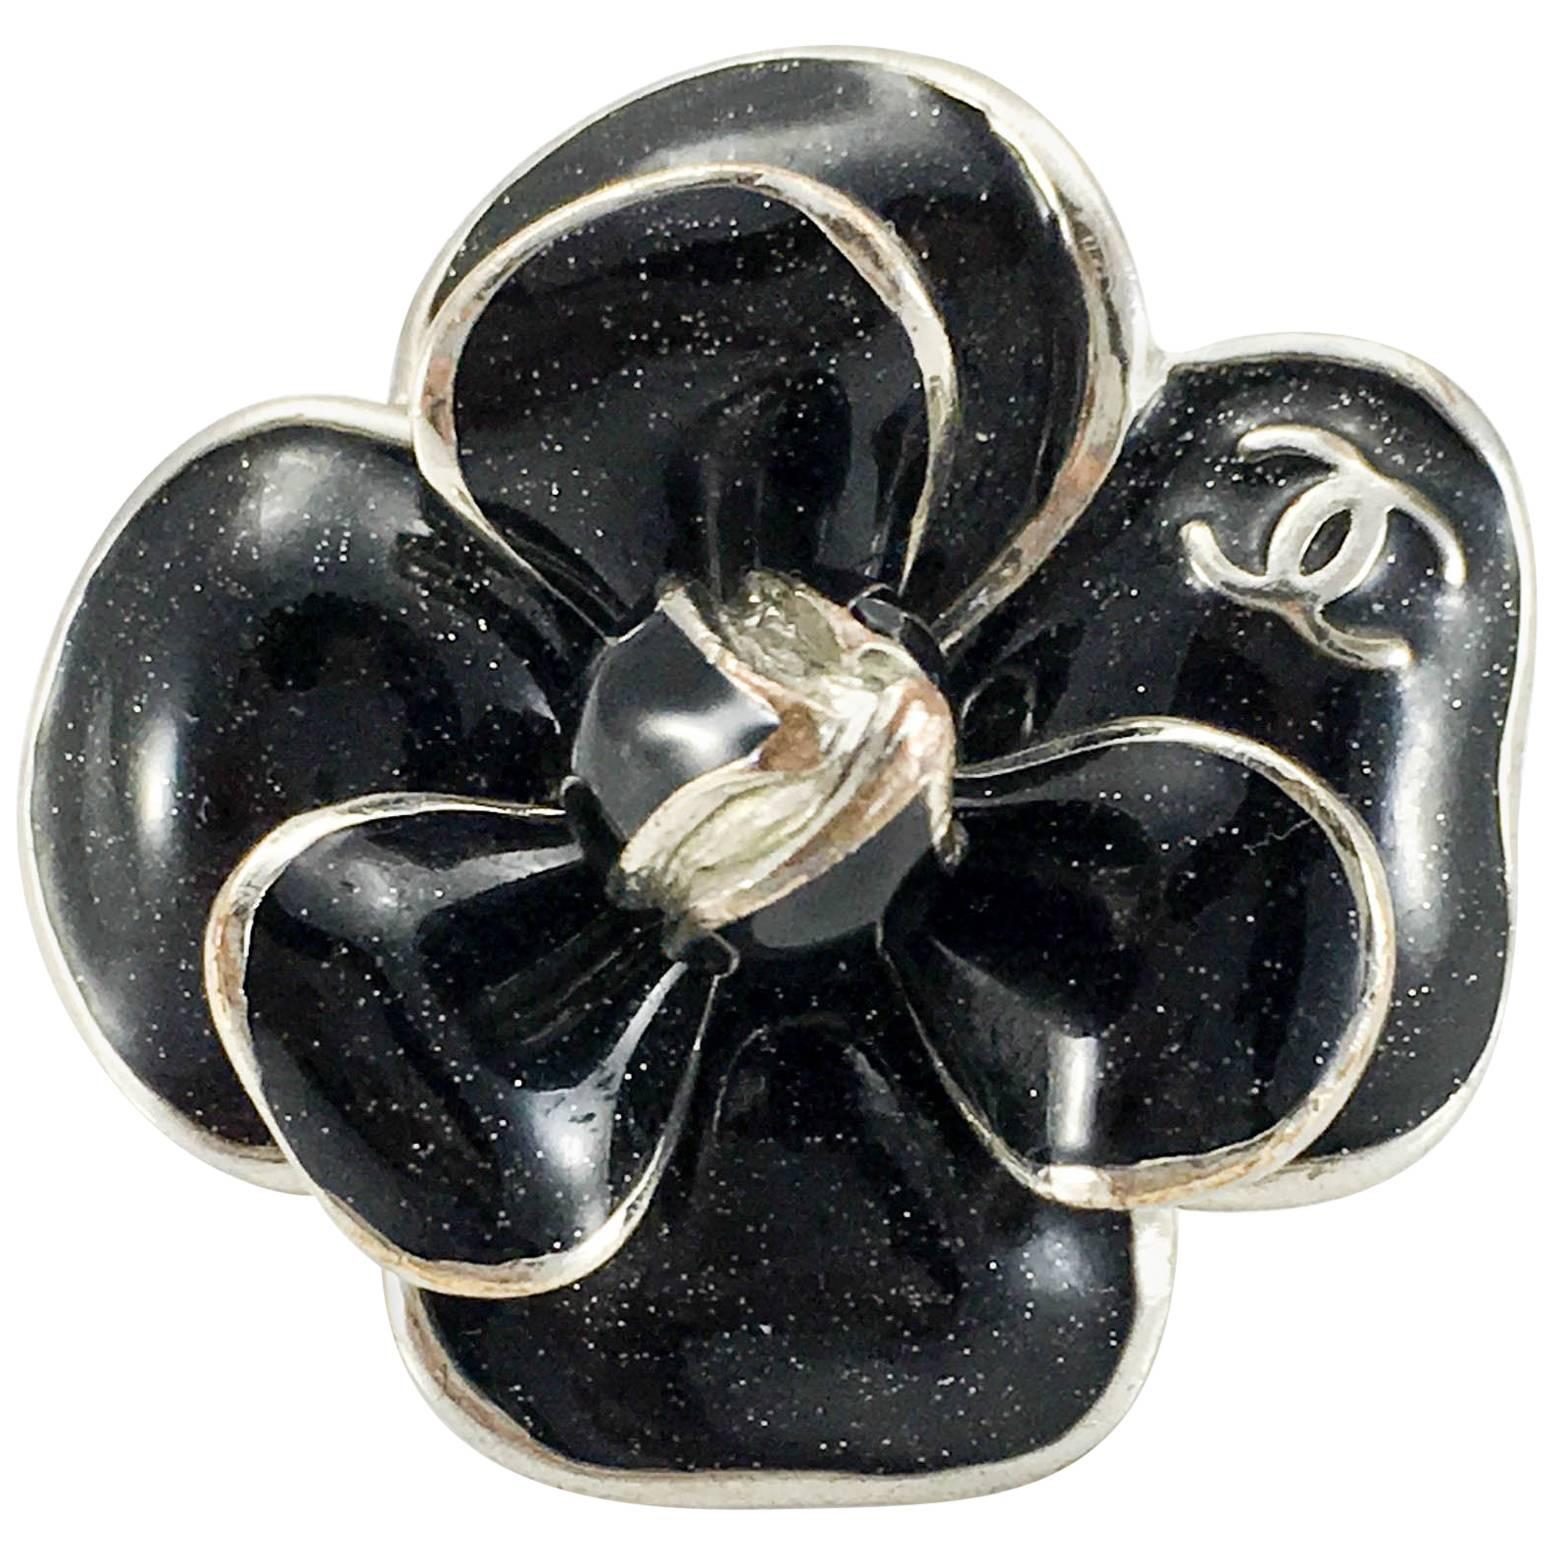 Sold at Auction: CHANEL Silver Black Enamel Camellia Hoop Earrings